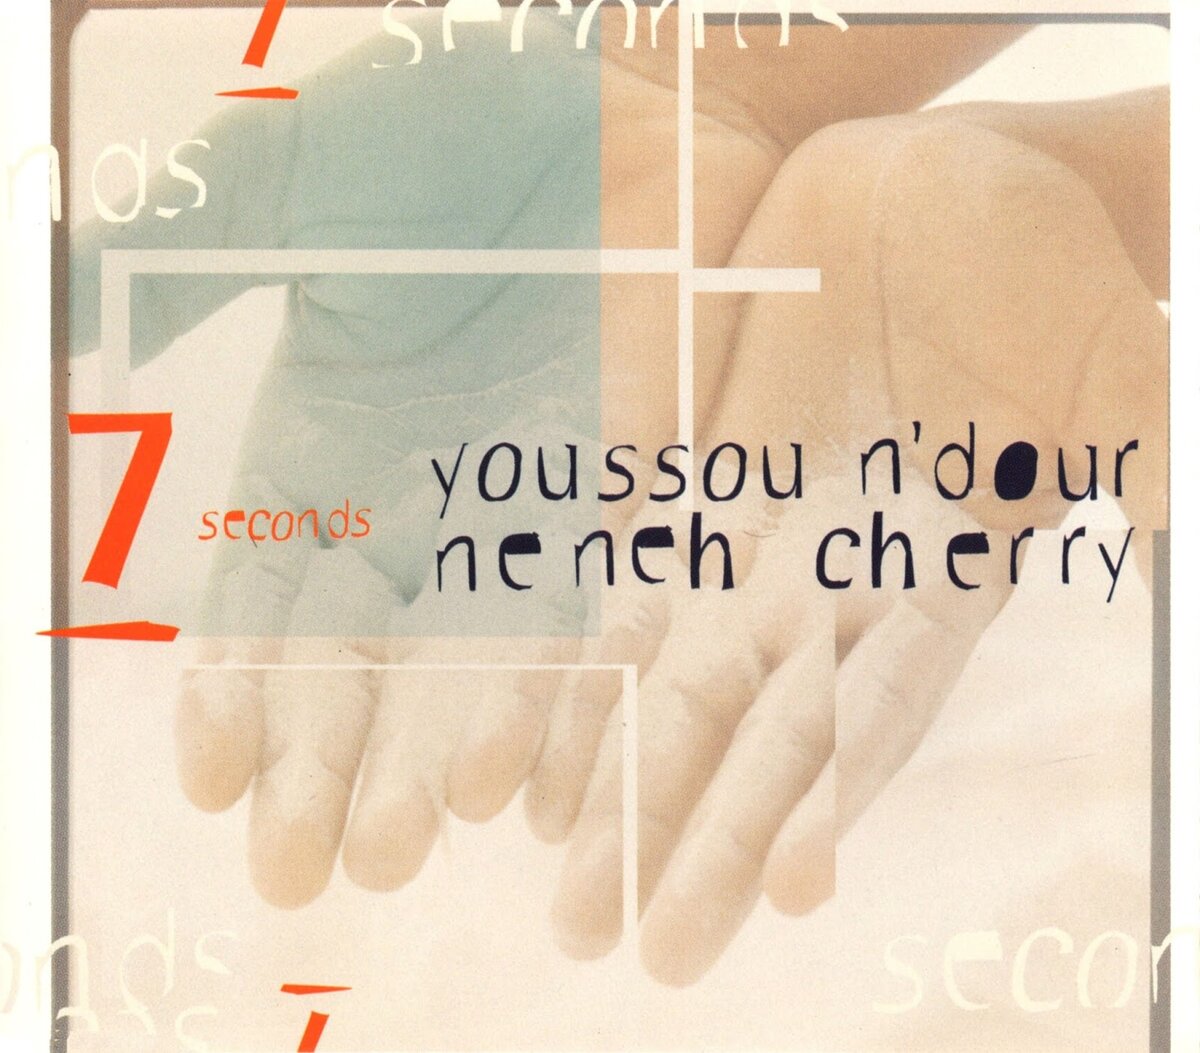 N dour cherry 7 seconds. 7 Seconds Юссу н’дур. Youssou n'Dour 7 seconds. Youssou n Dour Neneh Cherry 7 seconds. Neneh Cherry(feat. Youssou n'Dour) - 7 seconds..